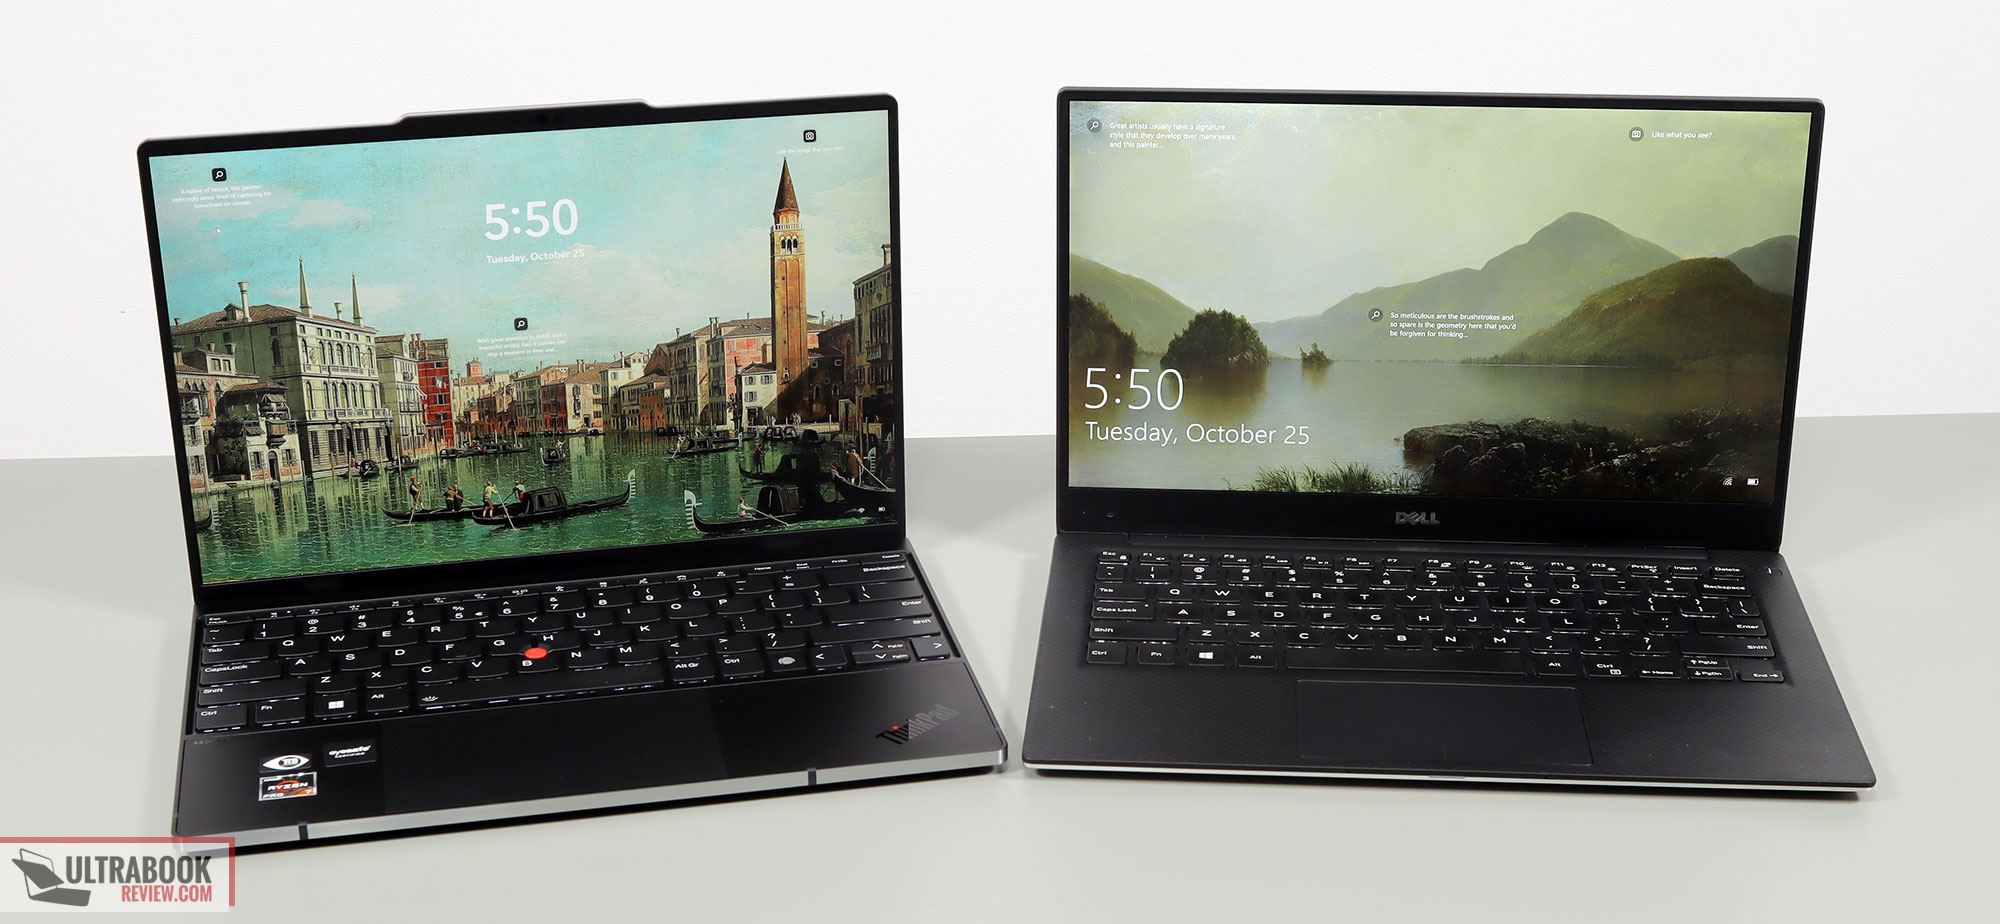 ThinkPad Z13 vs XPS 13, both compact 13-inch ultrabooks